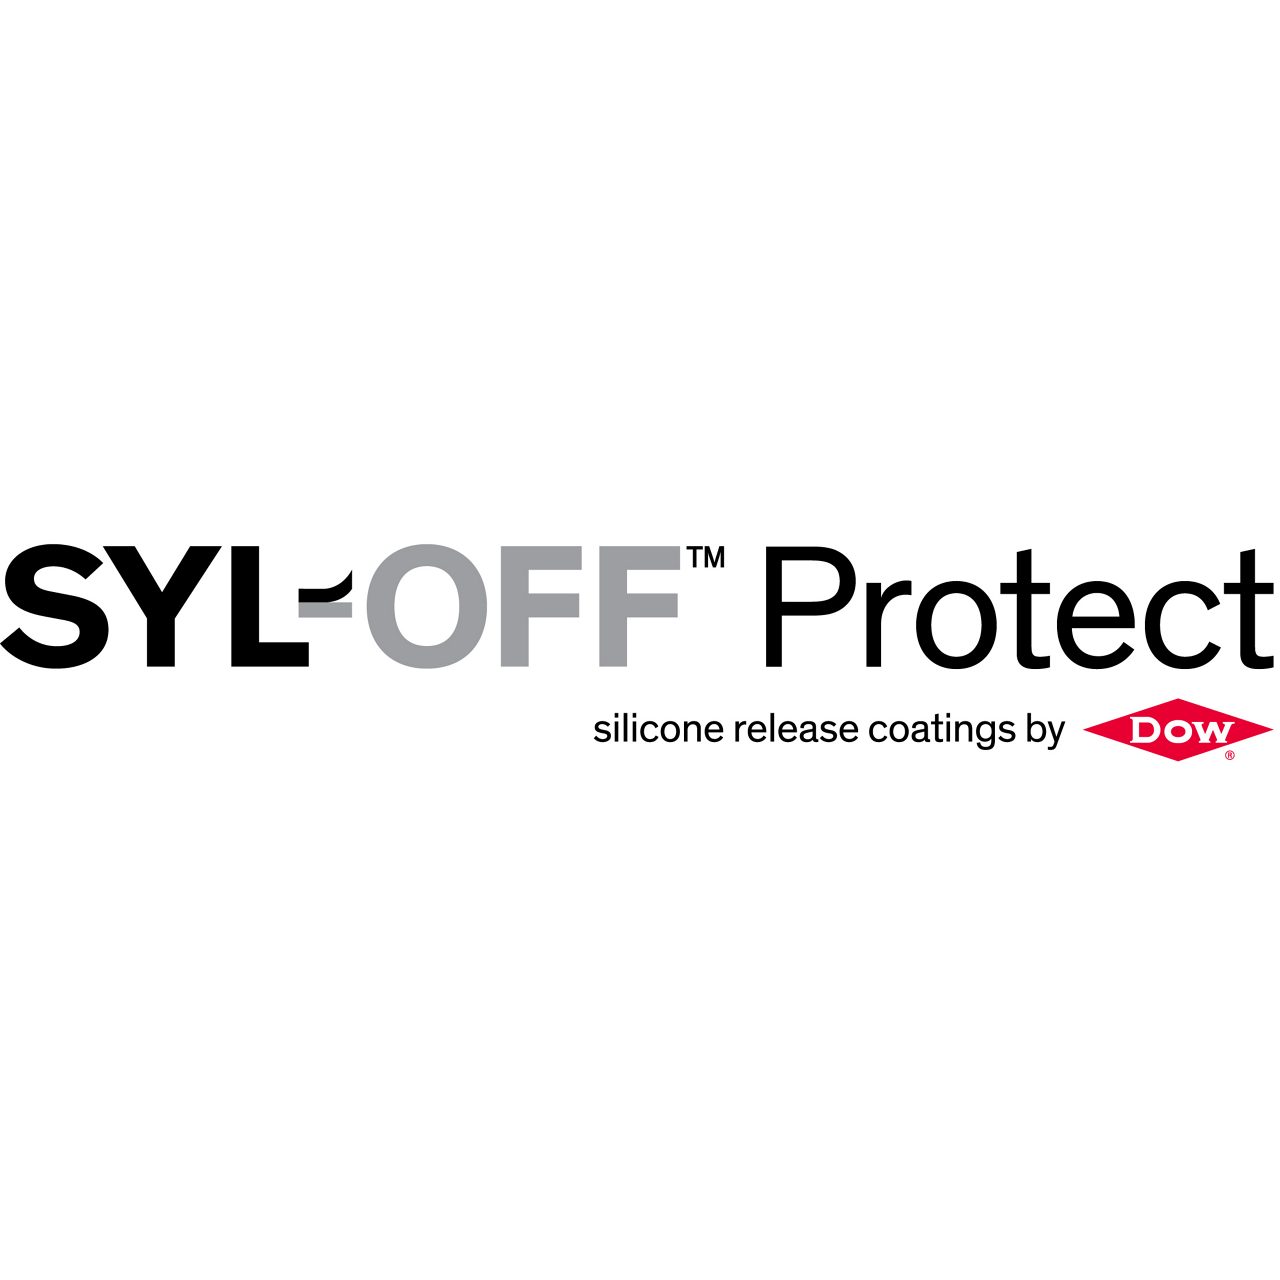 SYL-OFF™ Protect logo